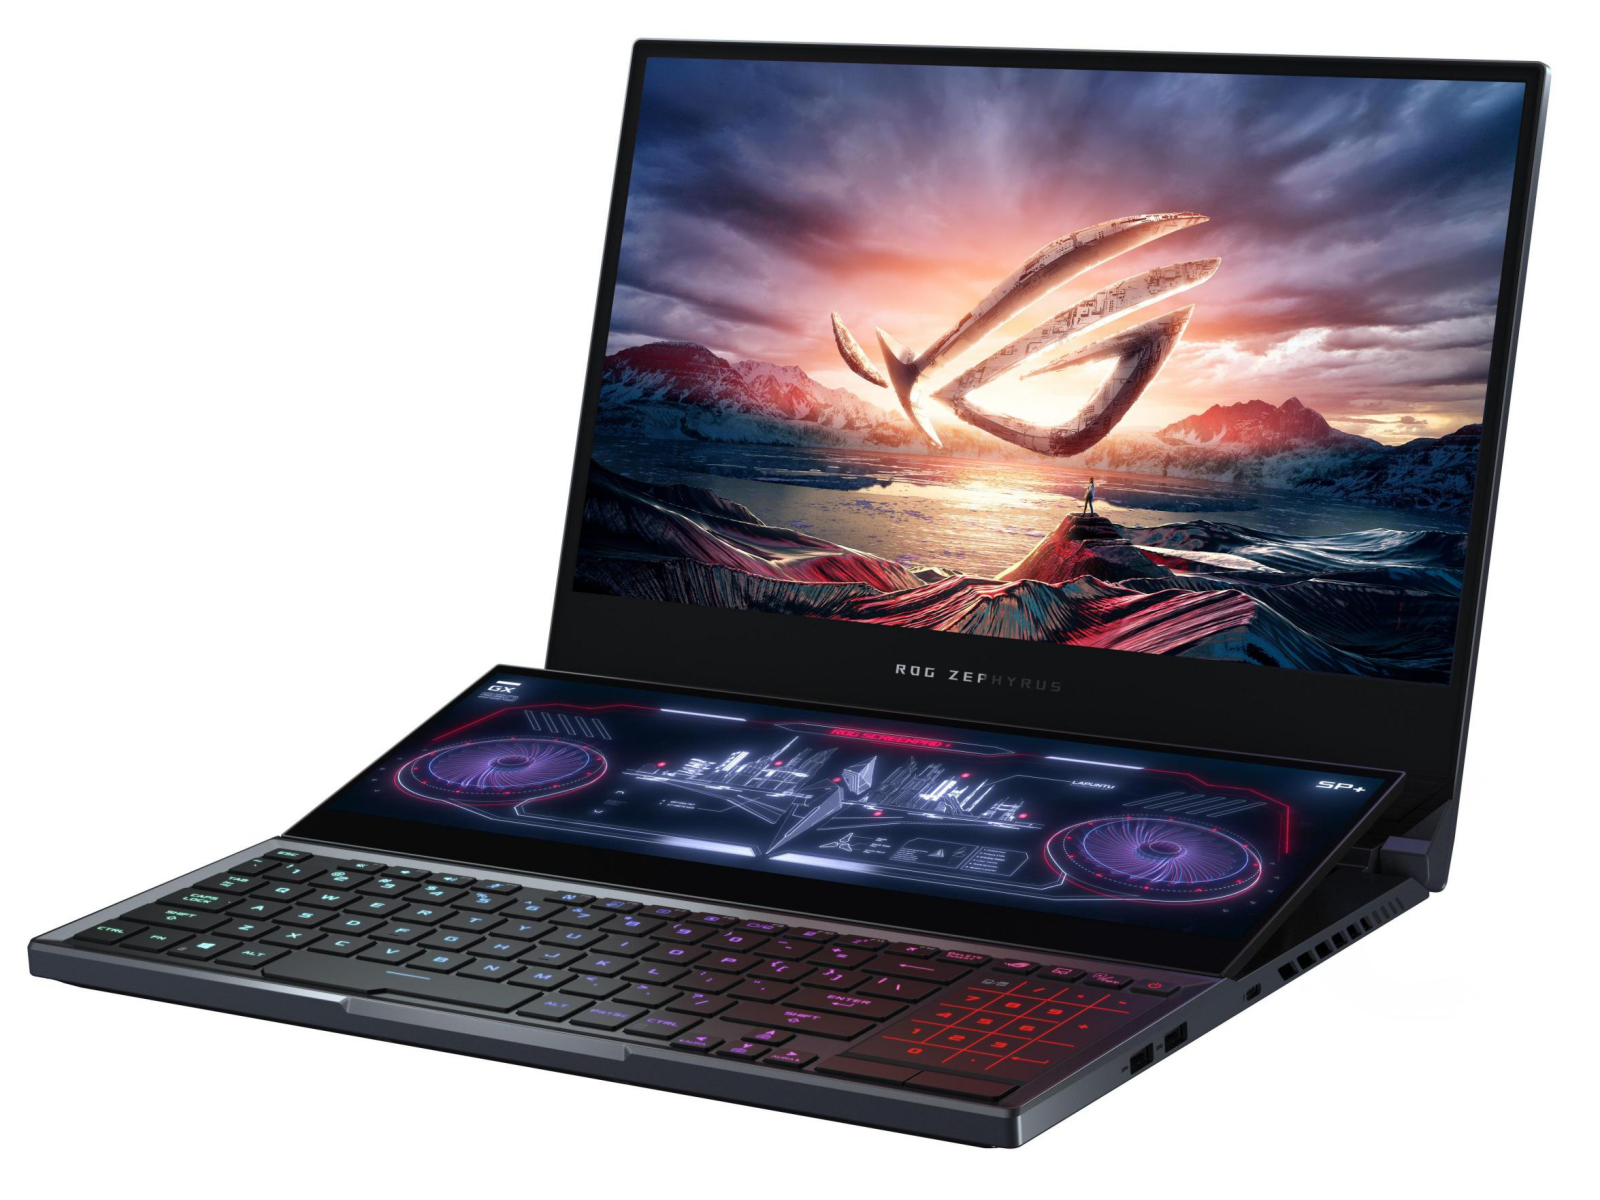 Asus rog zephyrus laptop GX550LXS